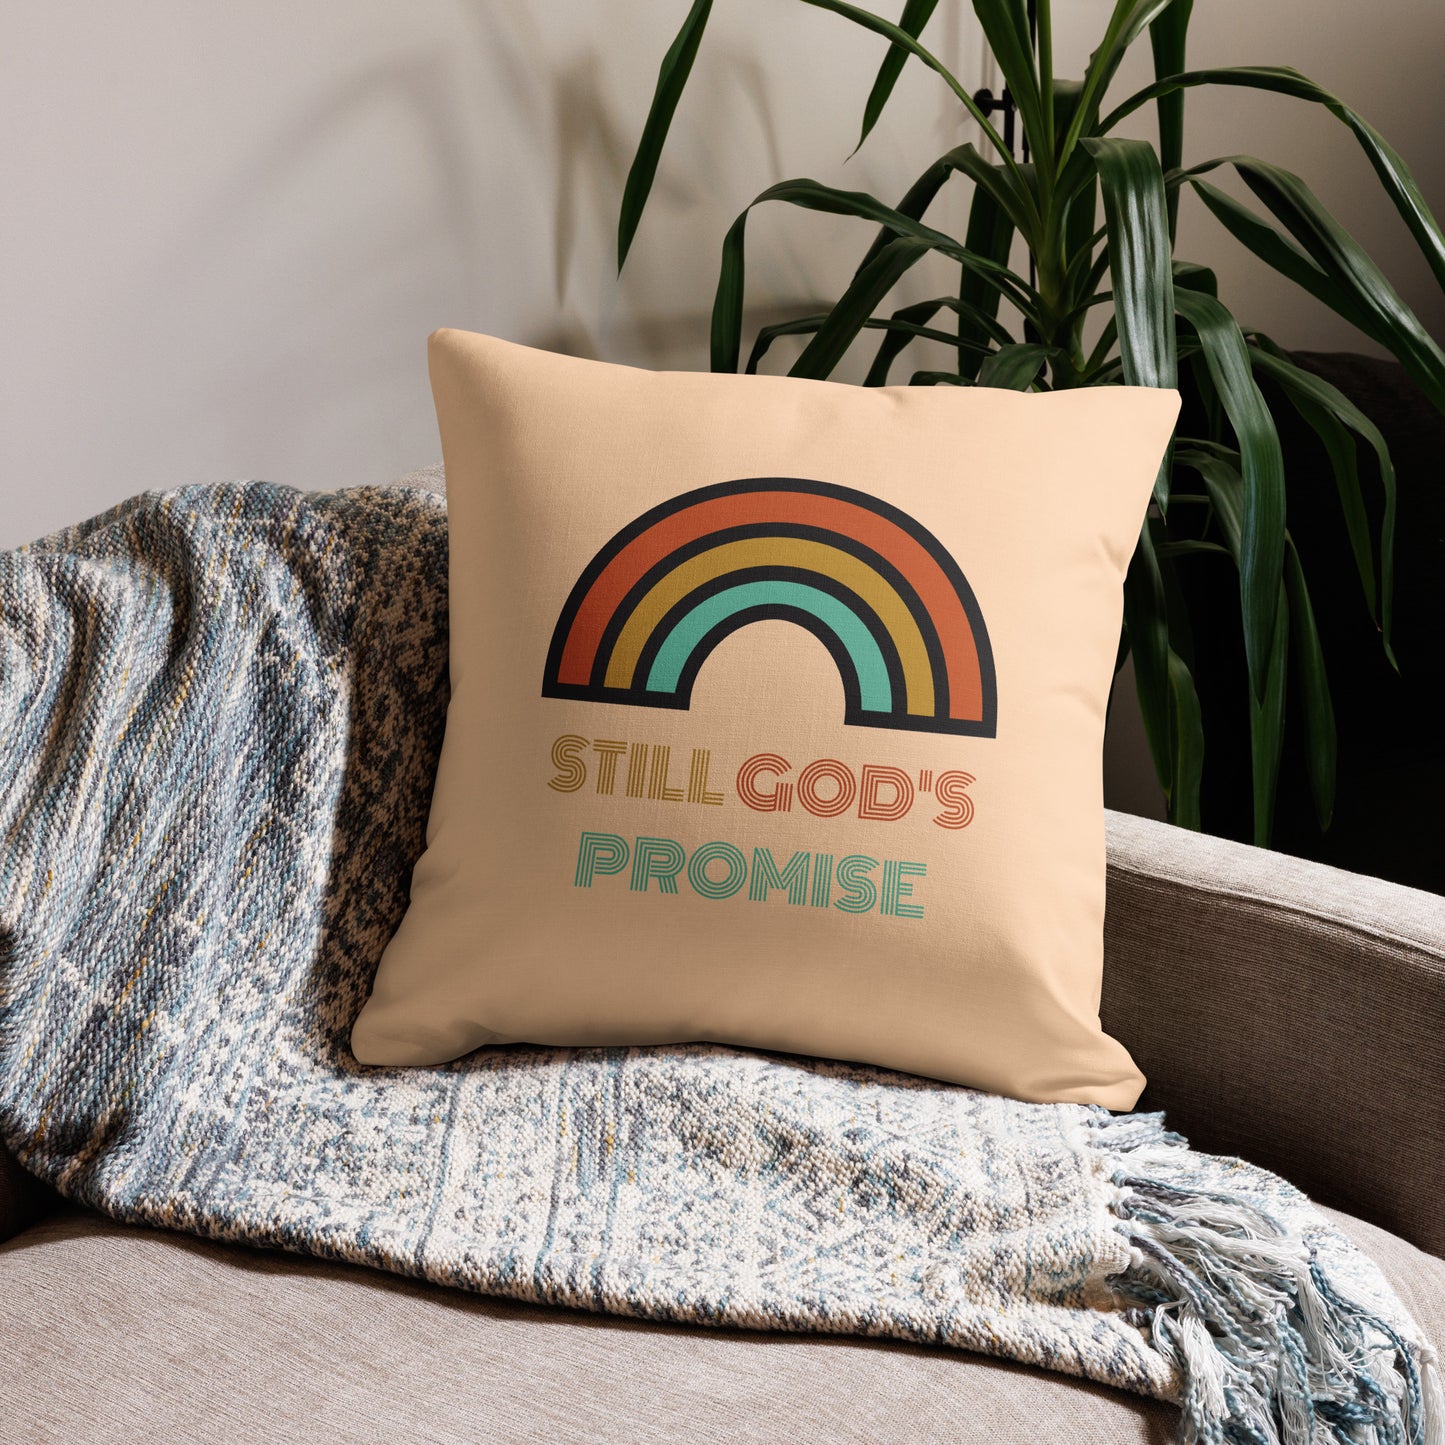 Still GOD's Promise Premium Pillow Case (PILLOW SOLD SEPARATELY)